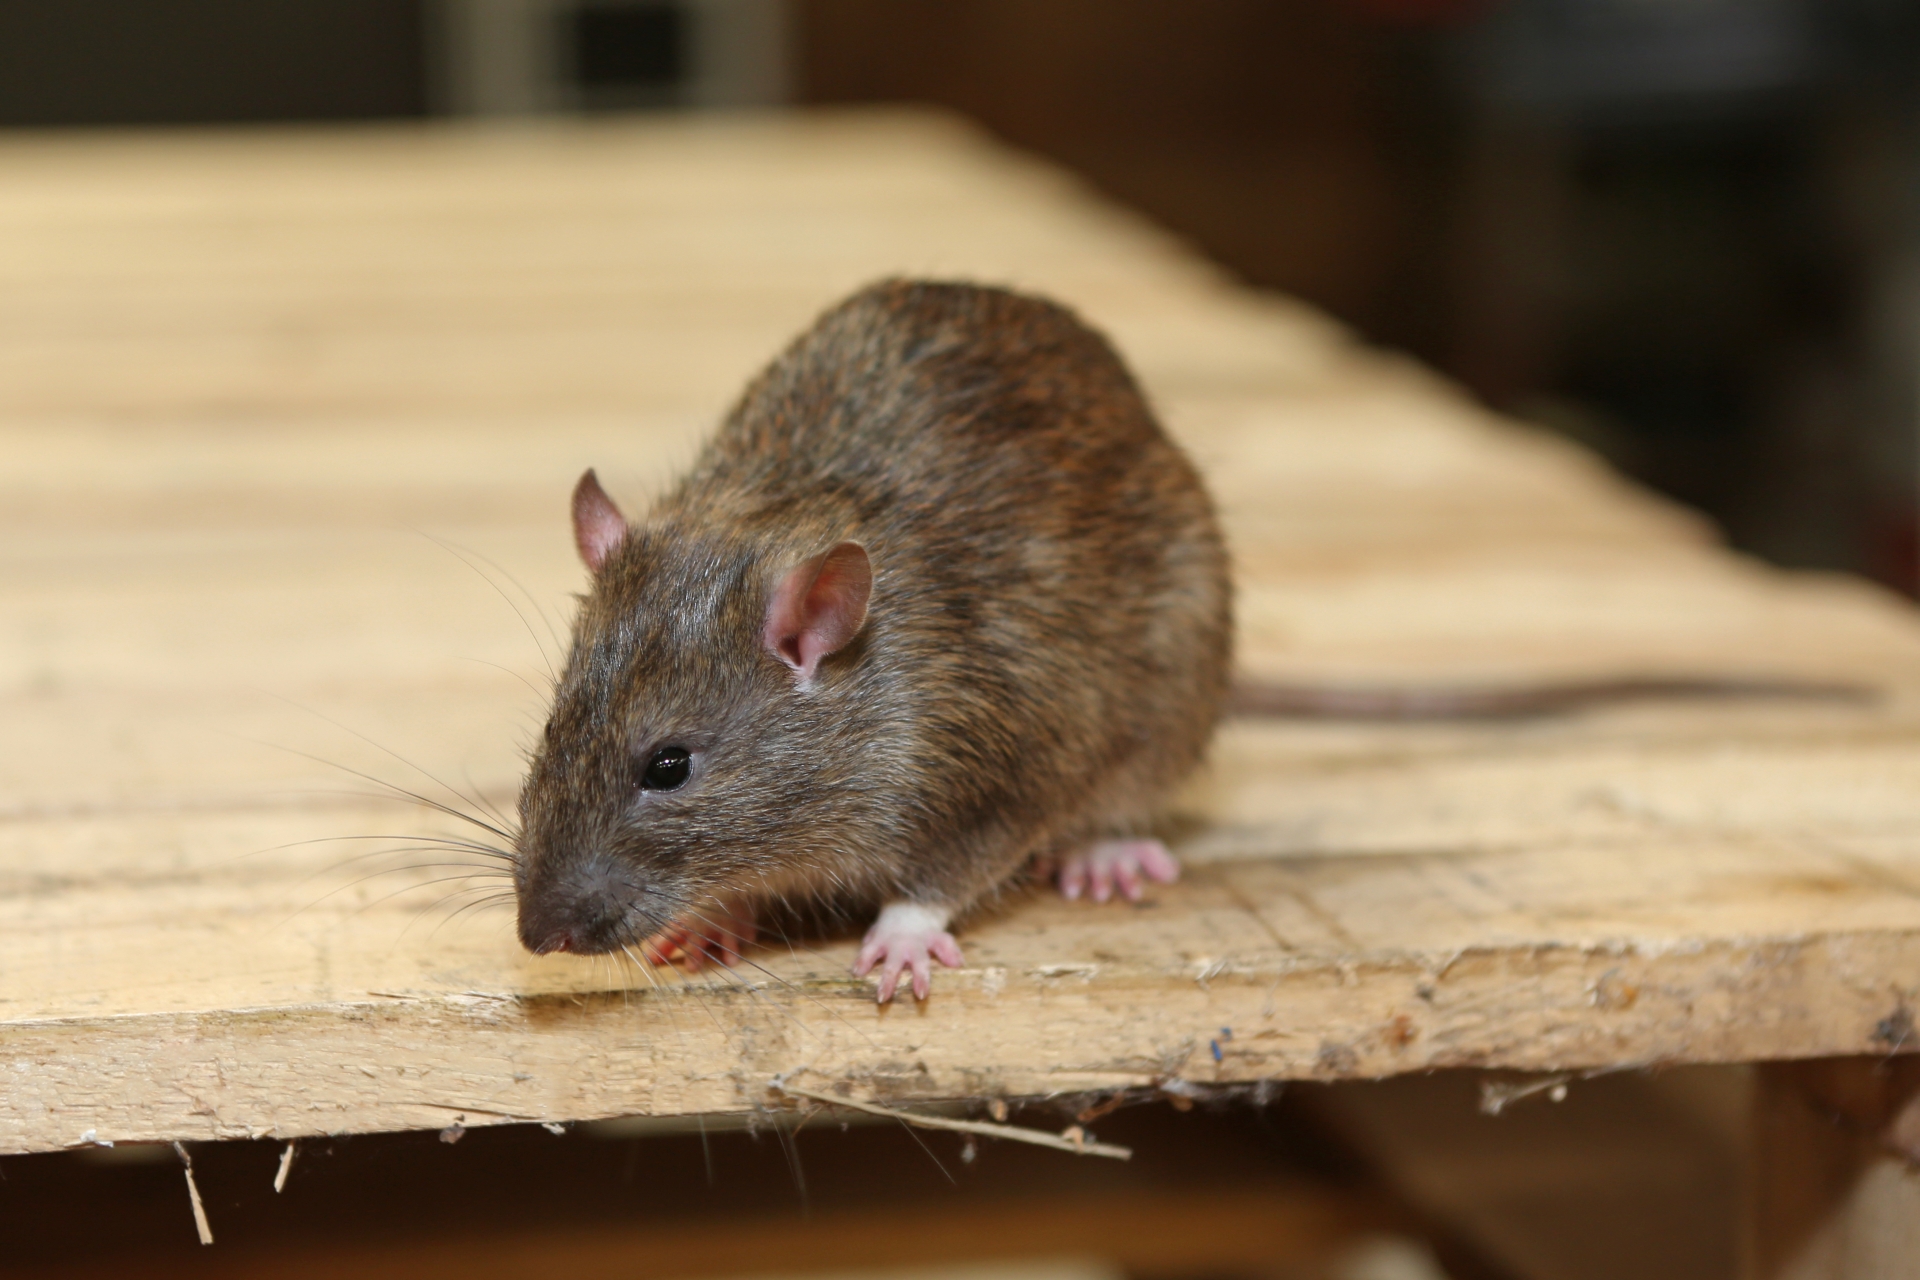 Rat extermination, Pest Control in Gidea Park, Heath Park, RM2. Call Now 020 8166 9746